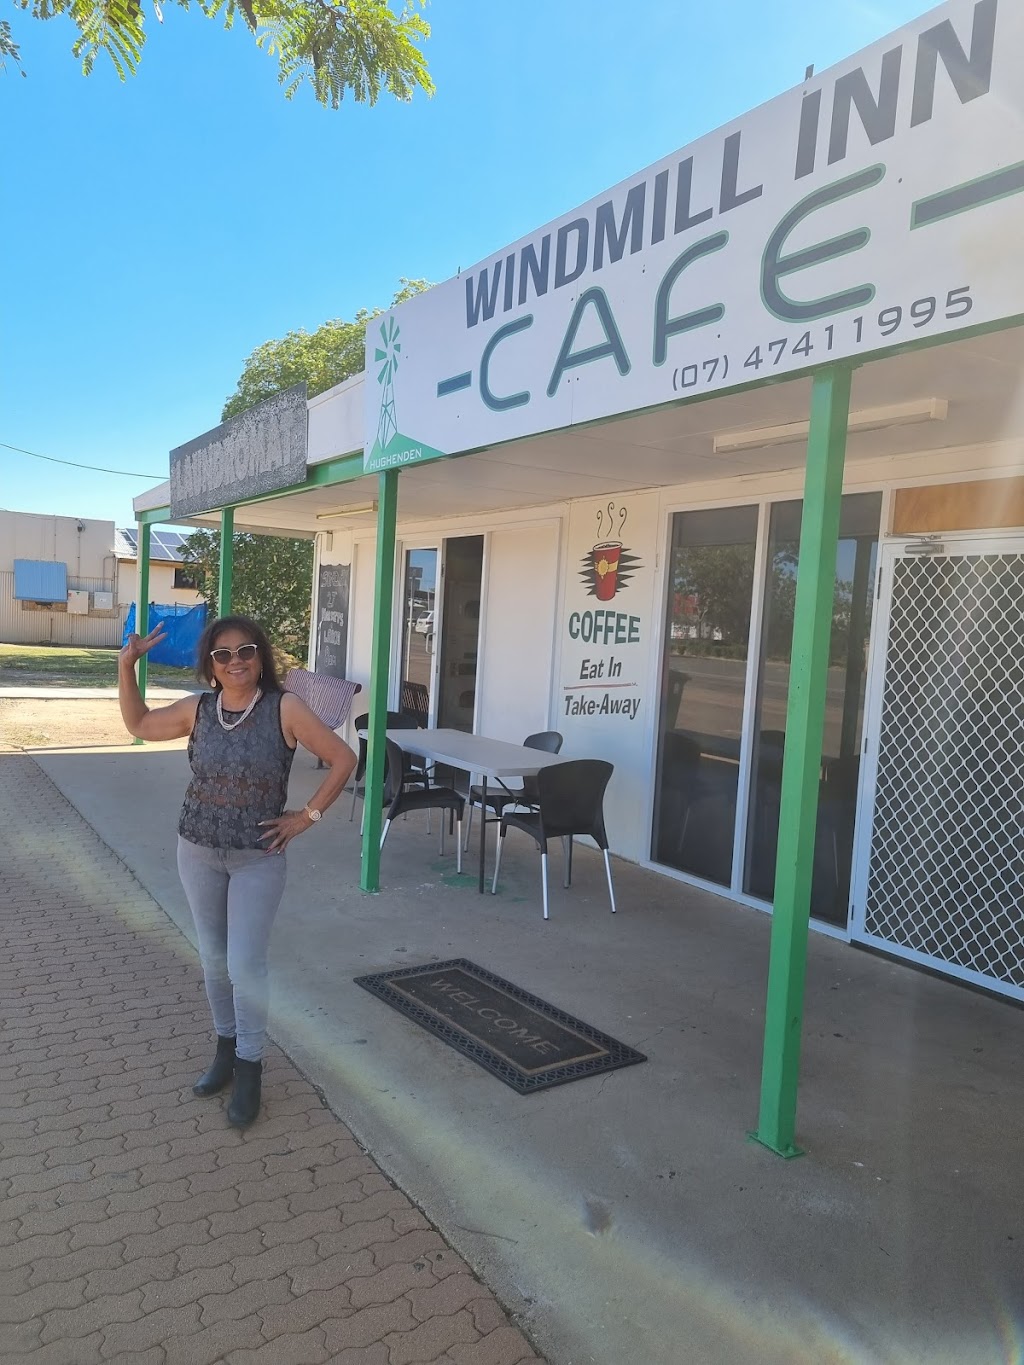 Windmill Inn cafe | cafe | 7 Gray St, Hughenden QLD 4821, Australia | 0747411995 OR +61 7 4741 1995